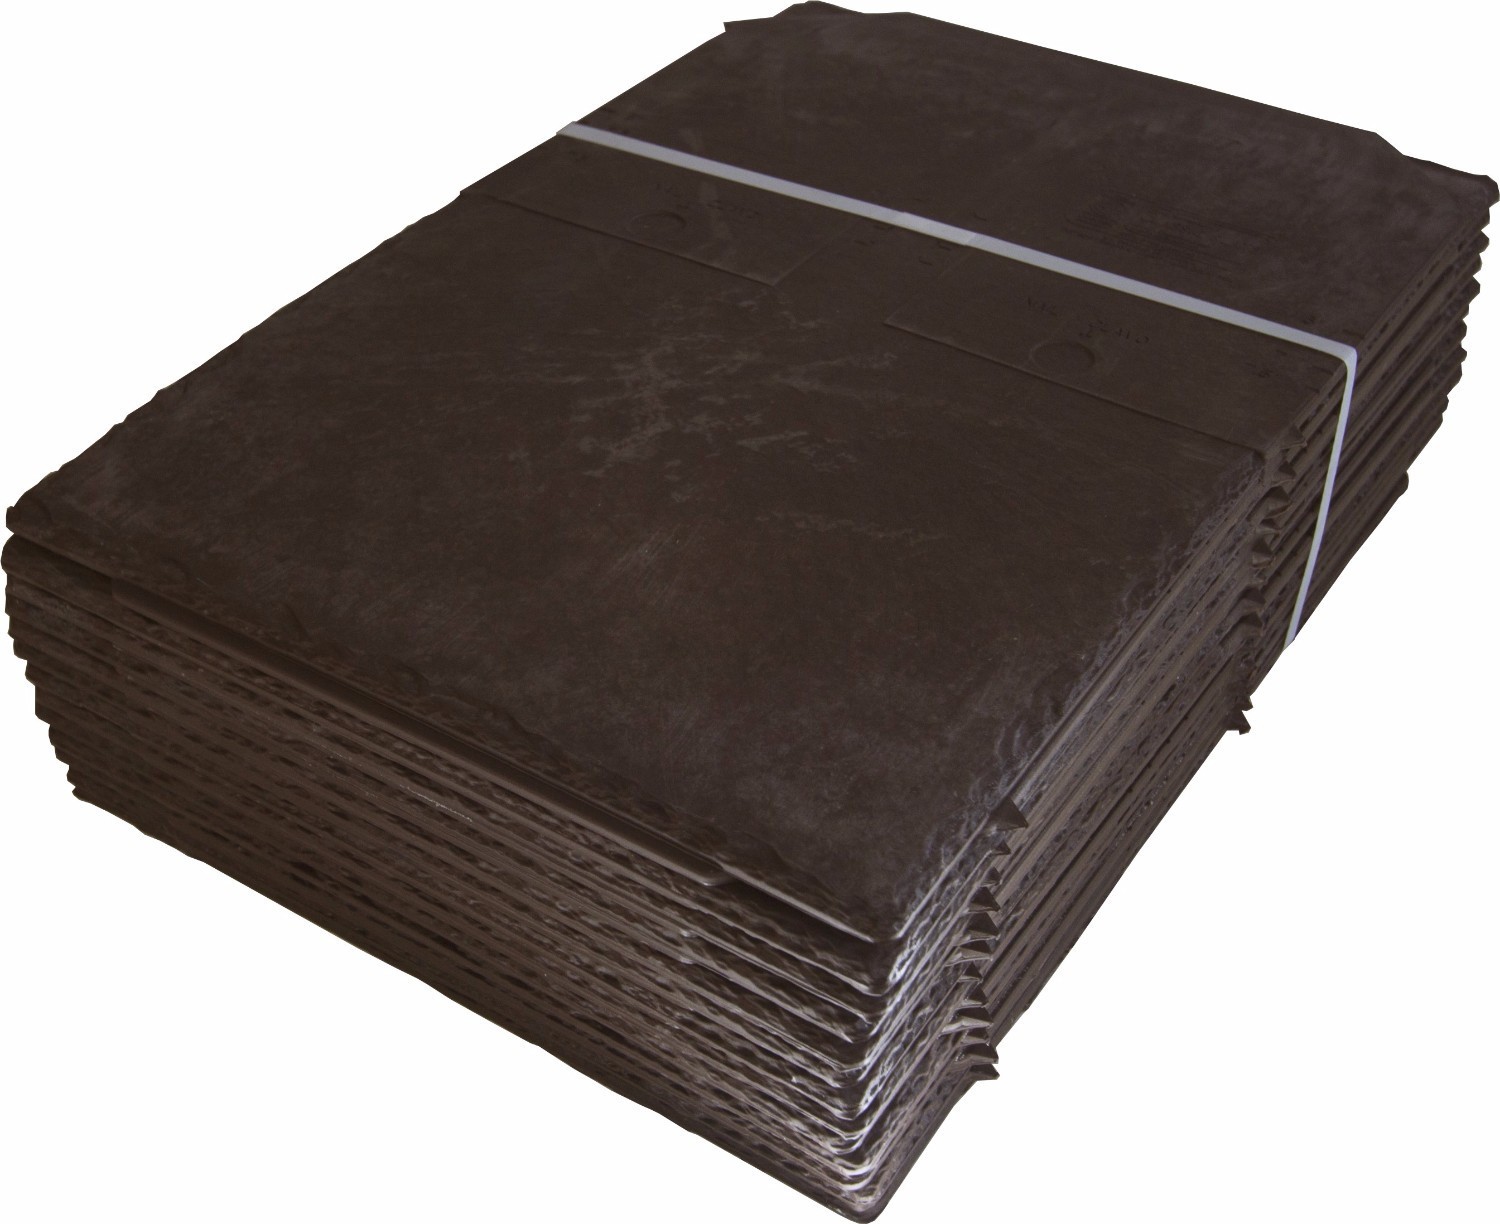 Tapco Synthetic Slate Tile - Chestnut Brown (25 Pack)